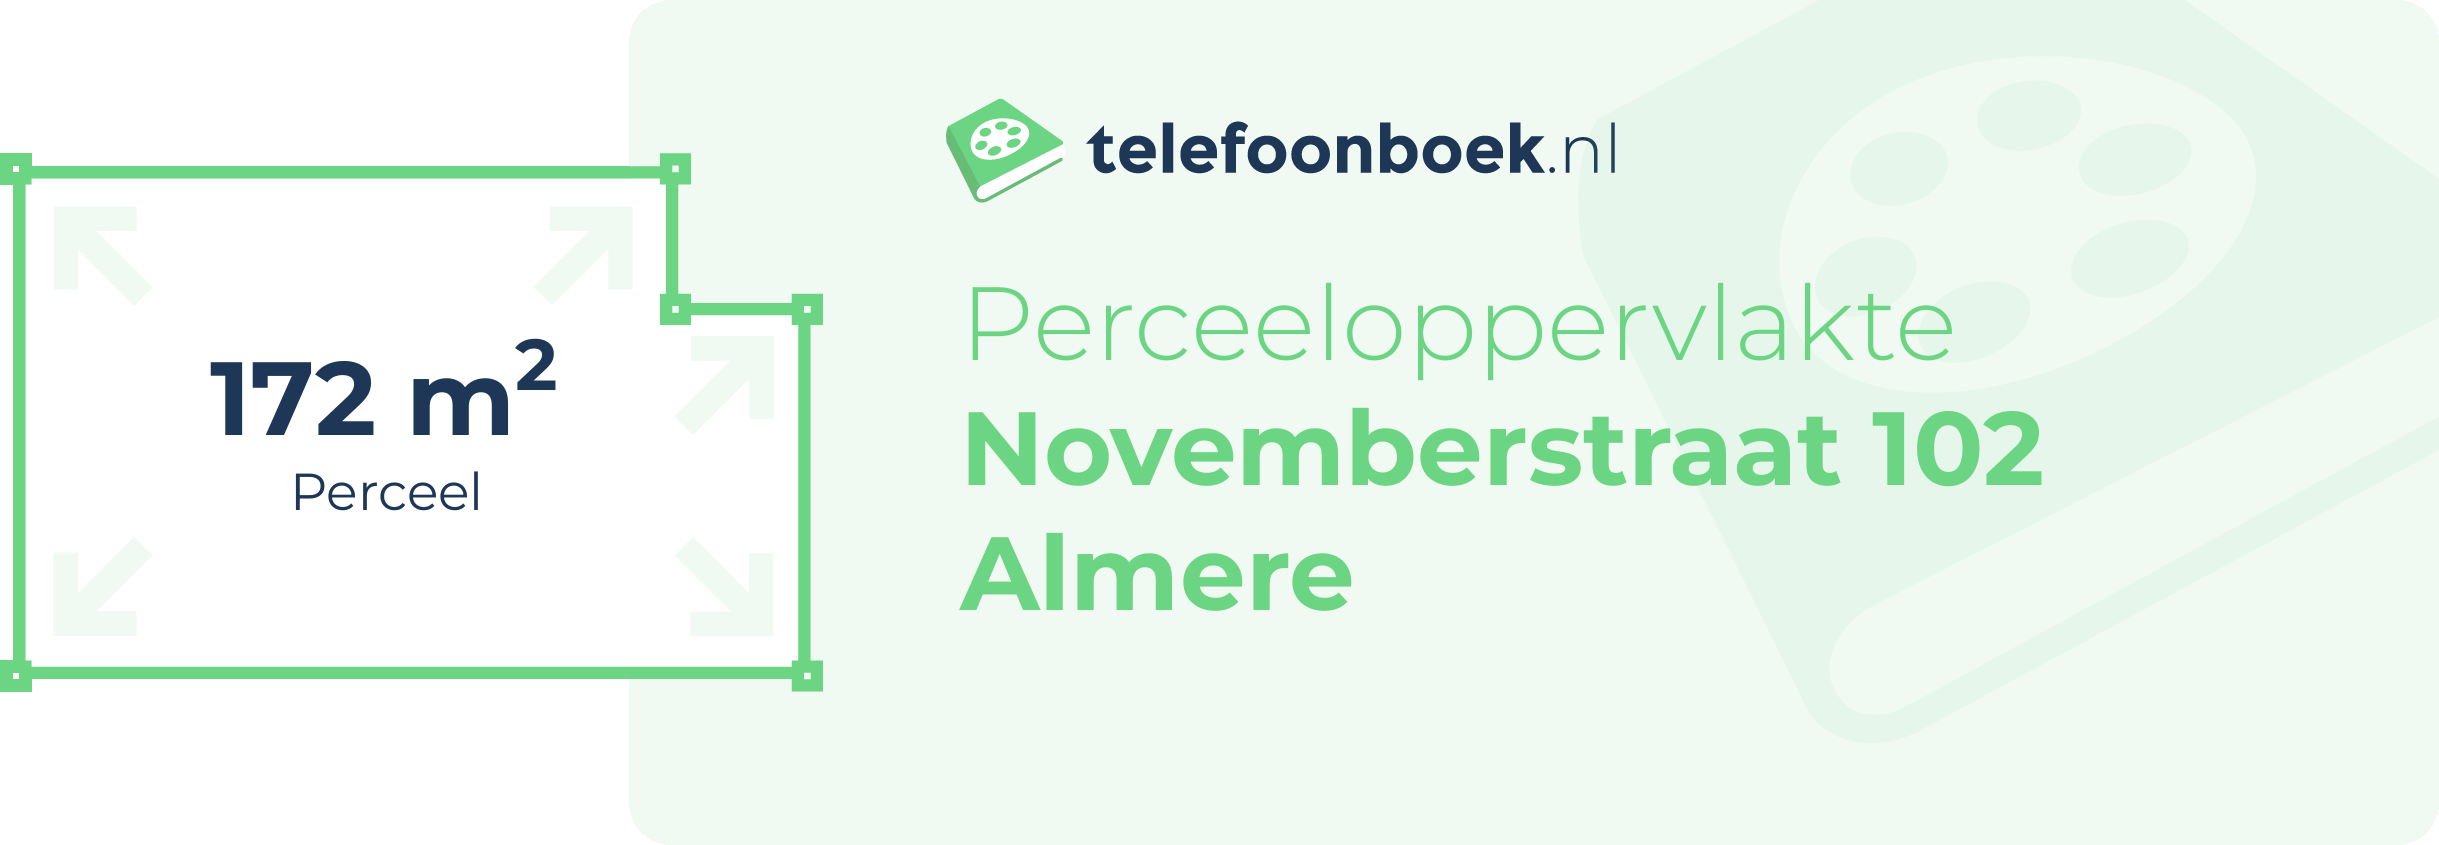 Perceeloppervlakte Novemberstraat 102 Almere